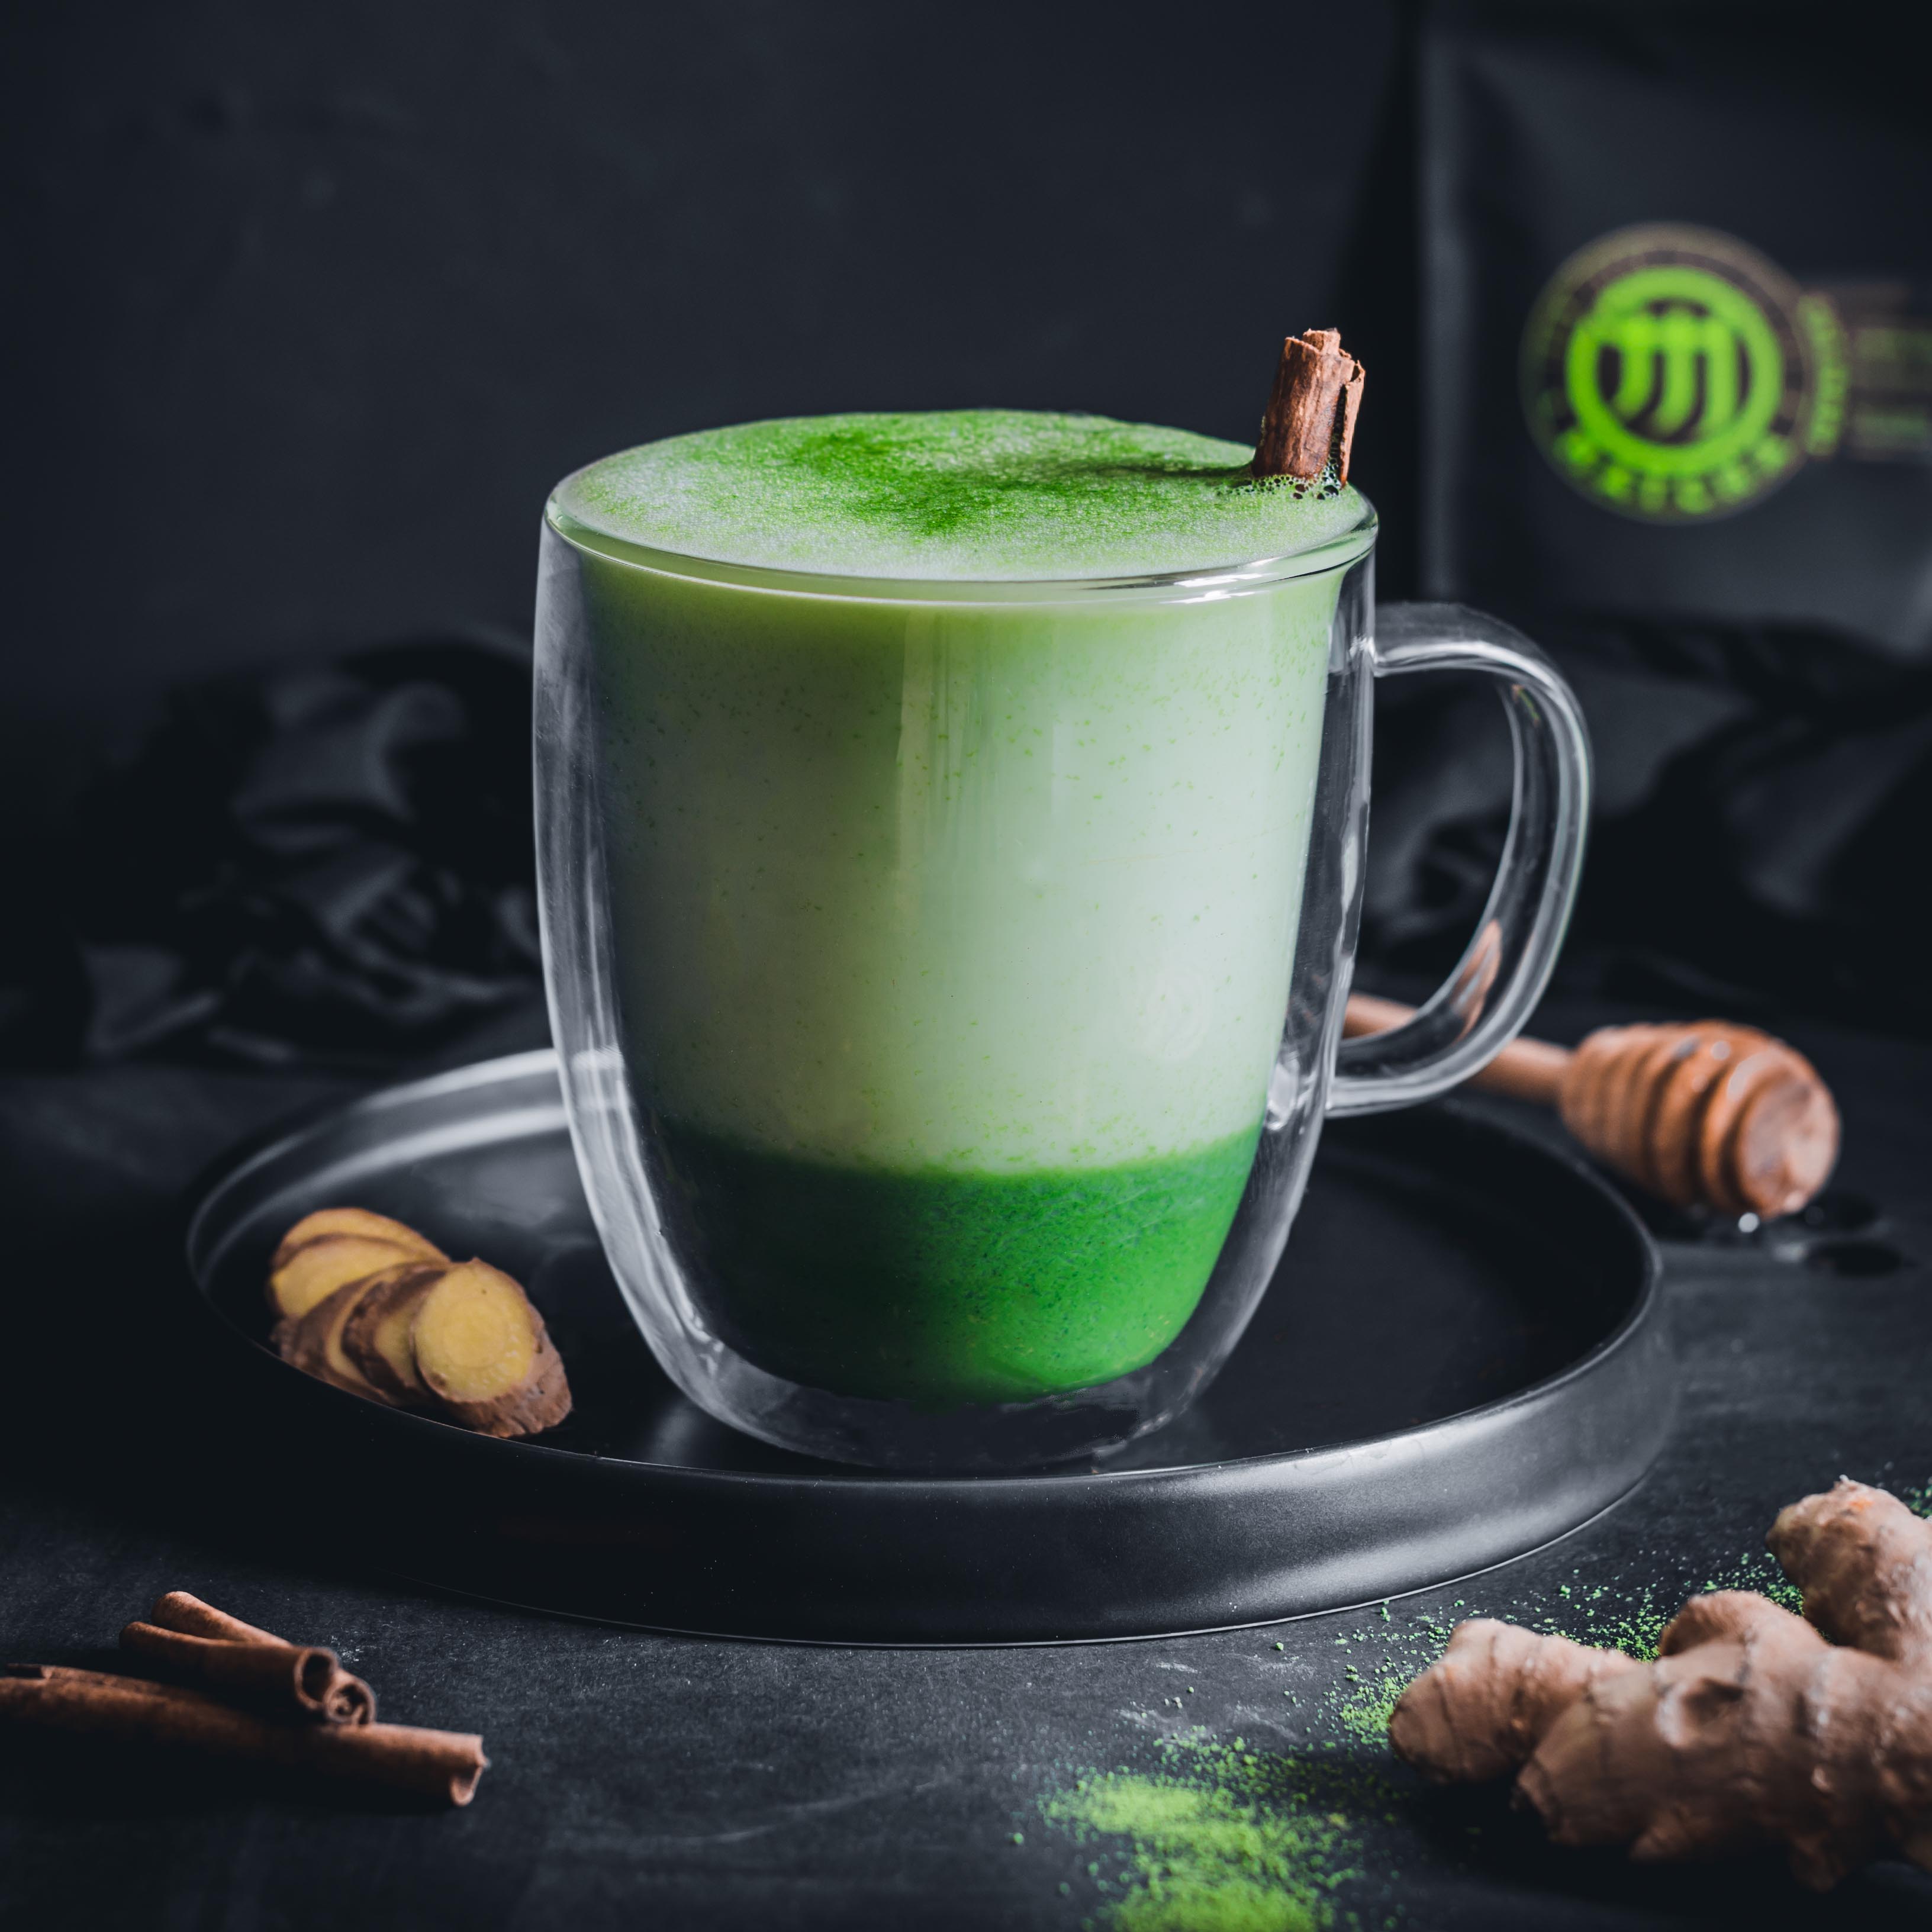 Ginger matcha latte - the best immune boosting drink